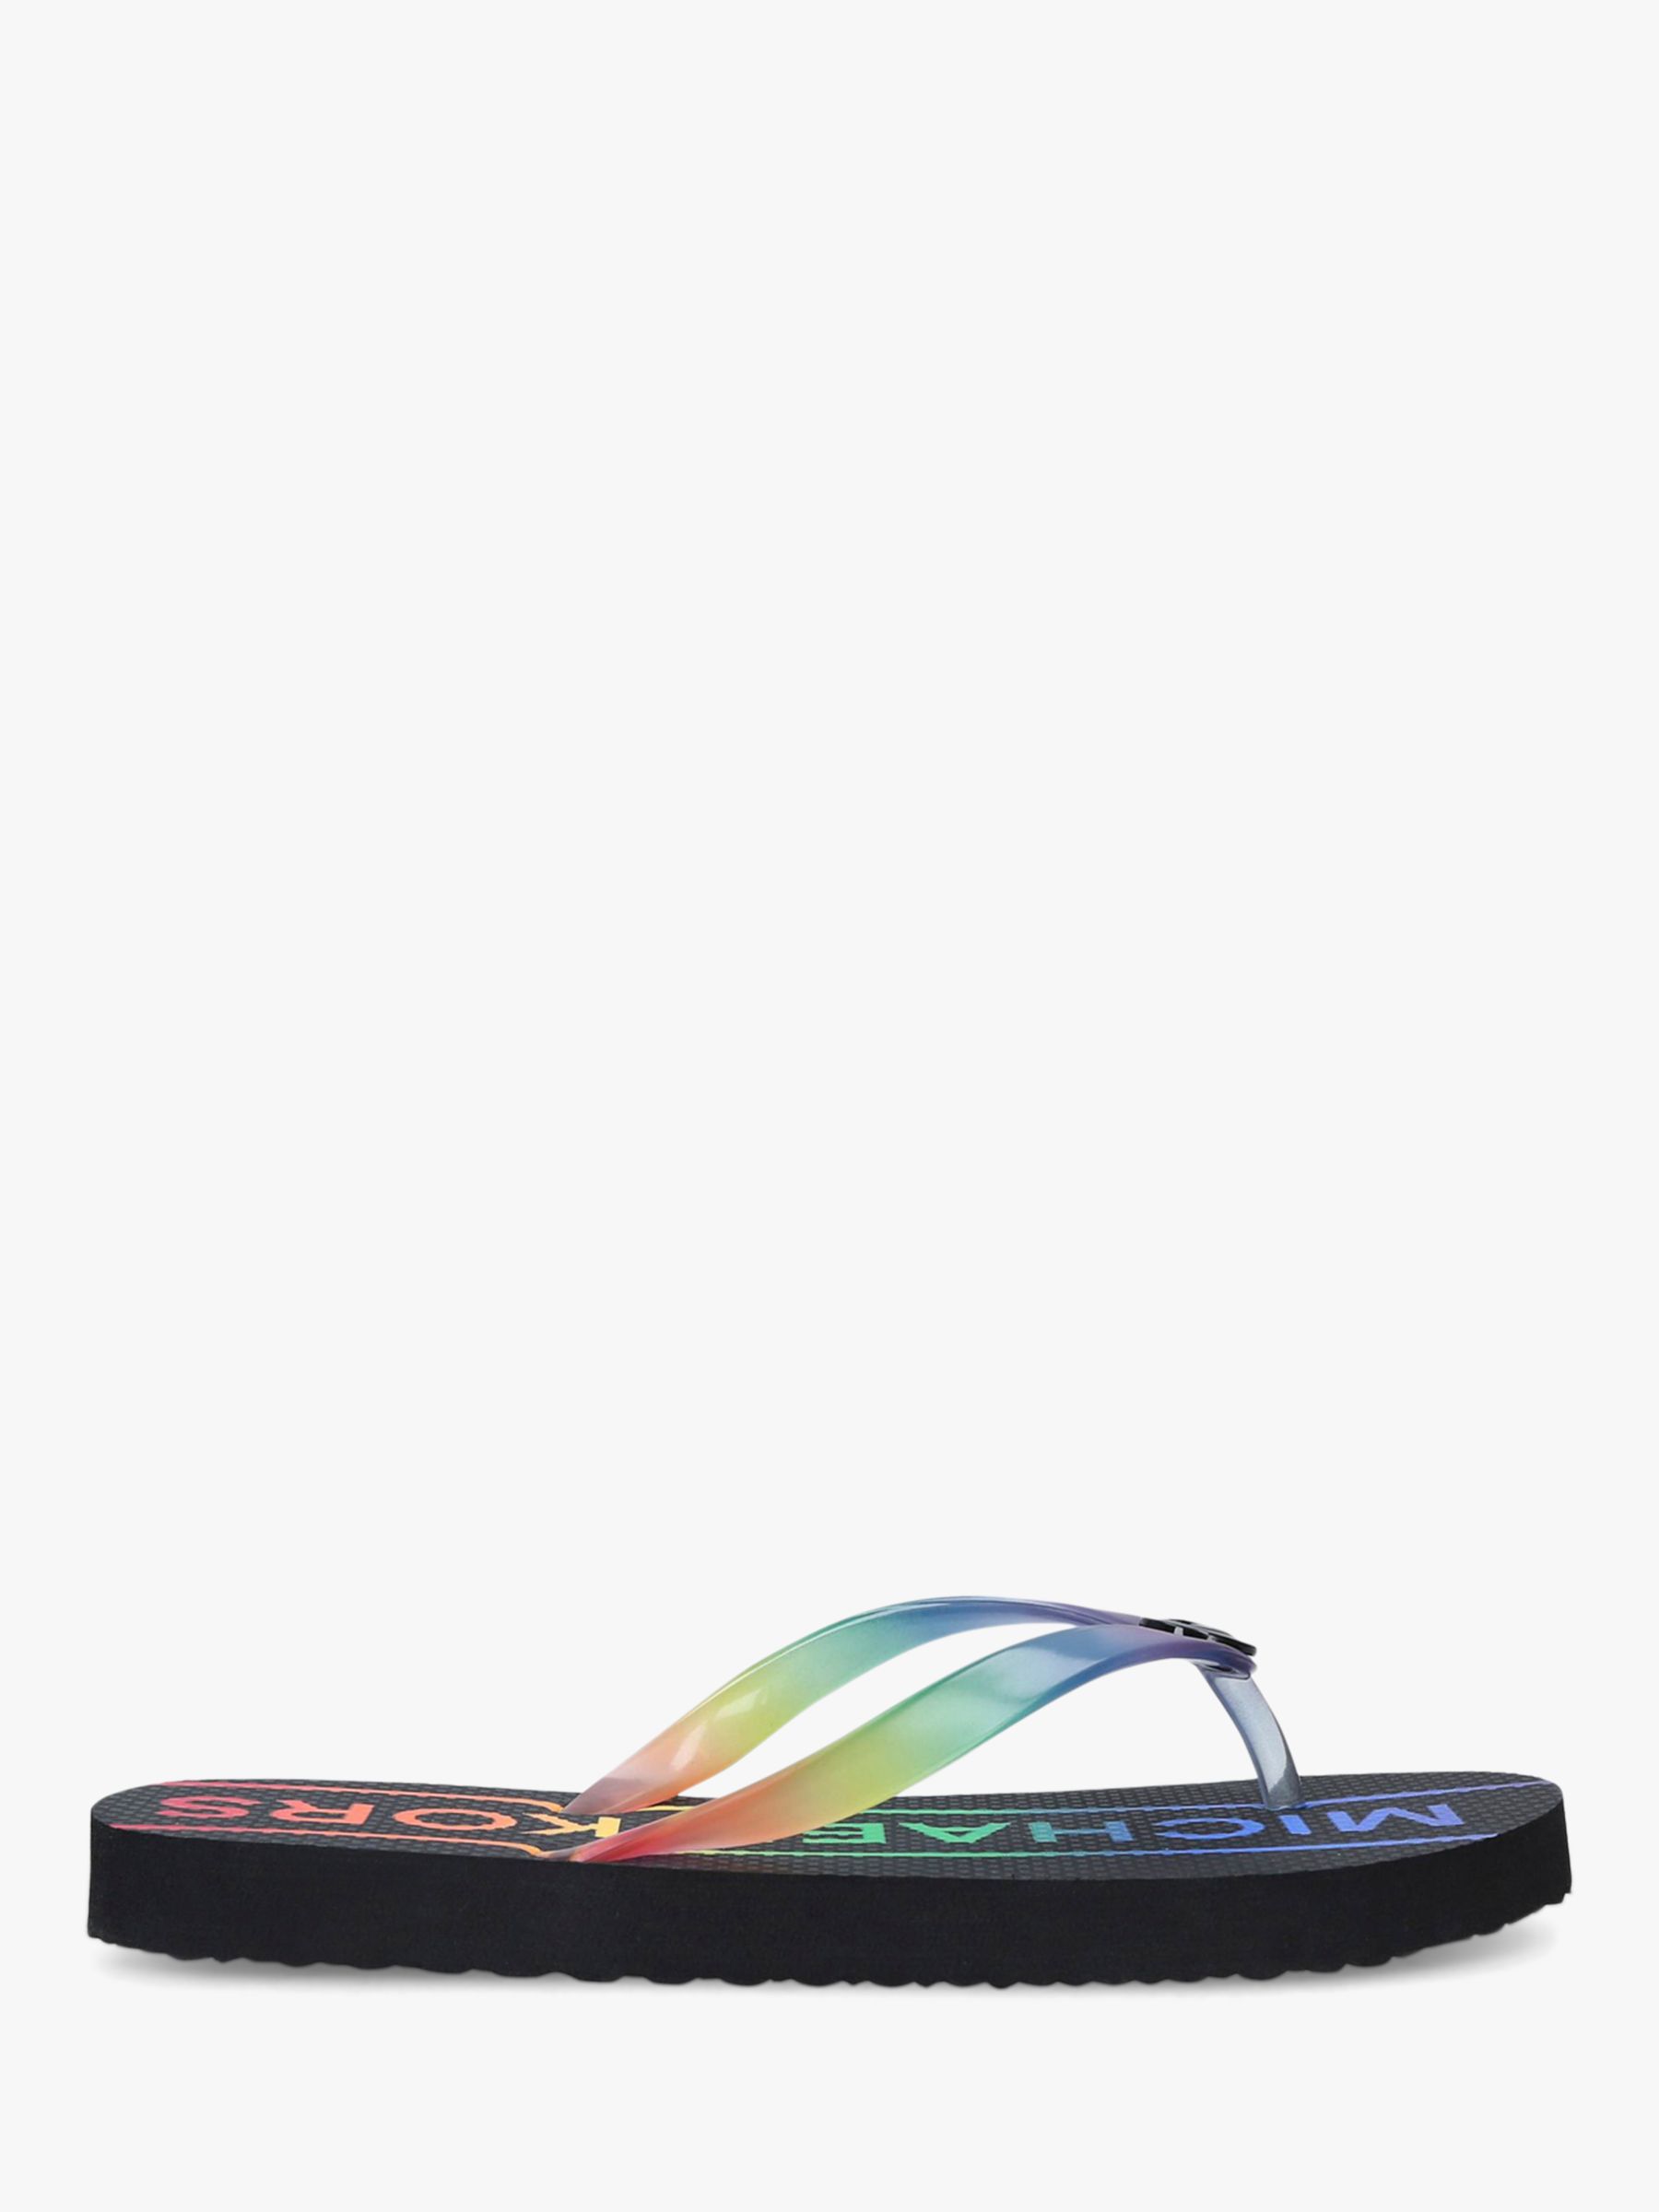 michael kors rainbow boots